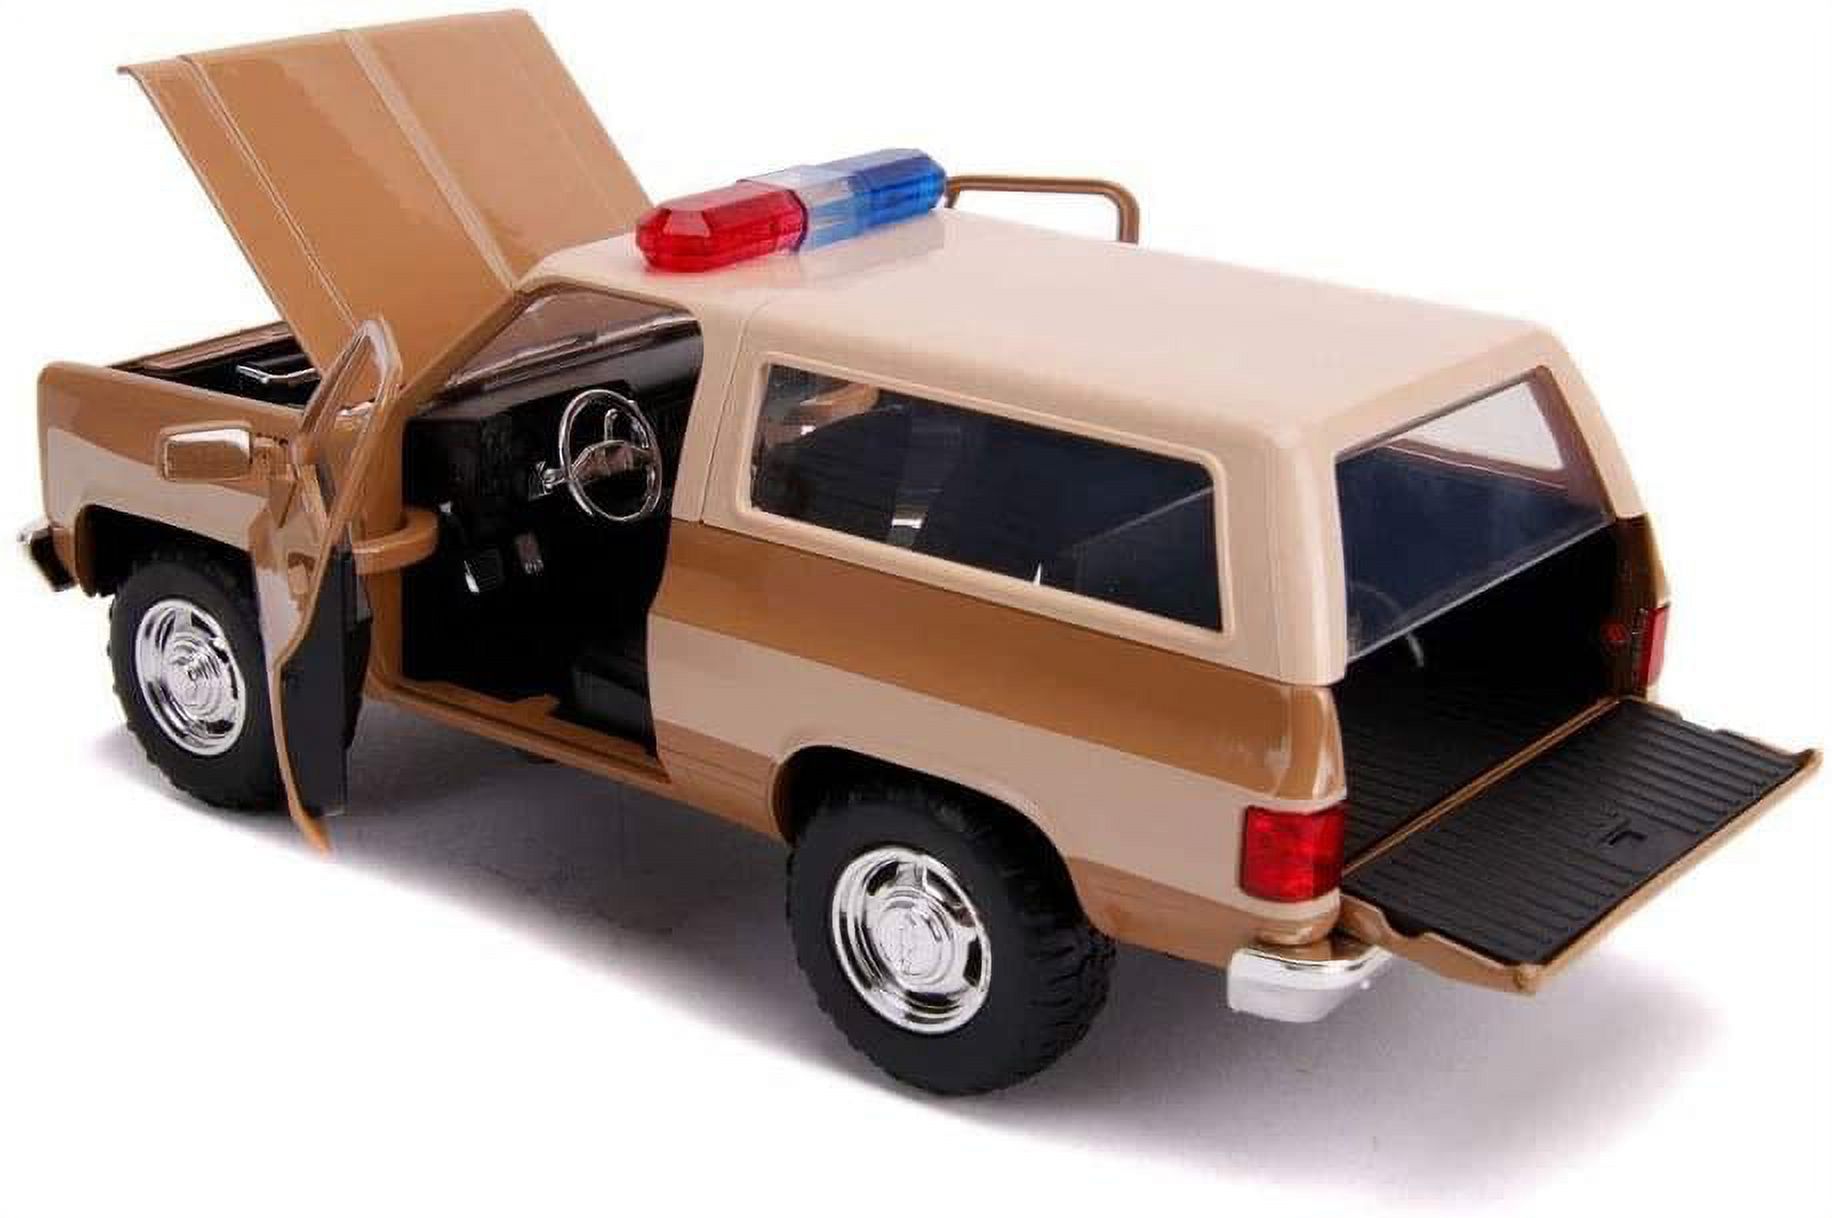 Jada Toys 1:24 Stranger Things - '80 Blazer with Badge Car Play Vehicle - image 2 of 6